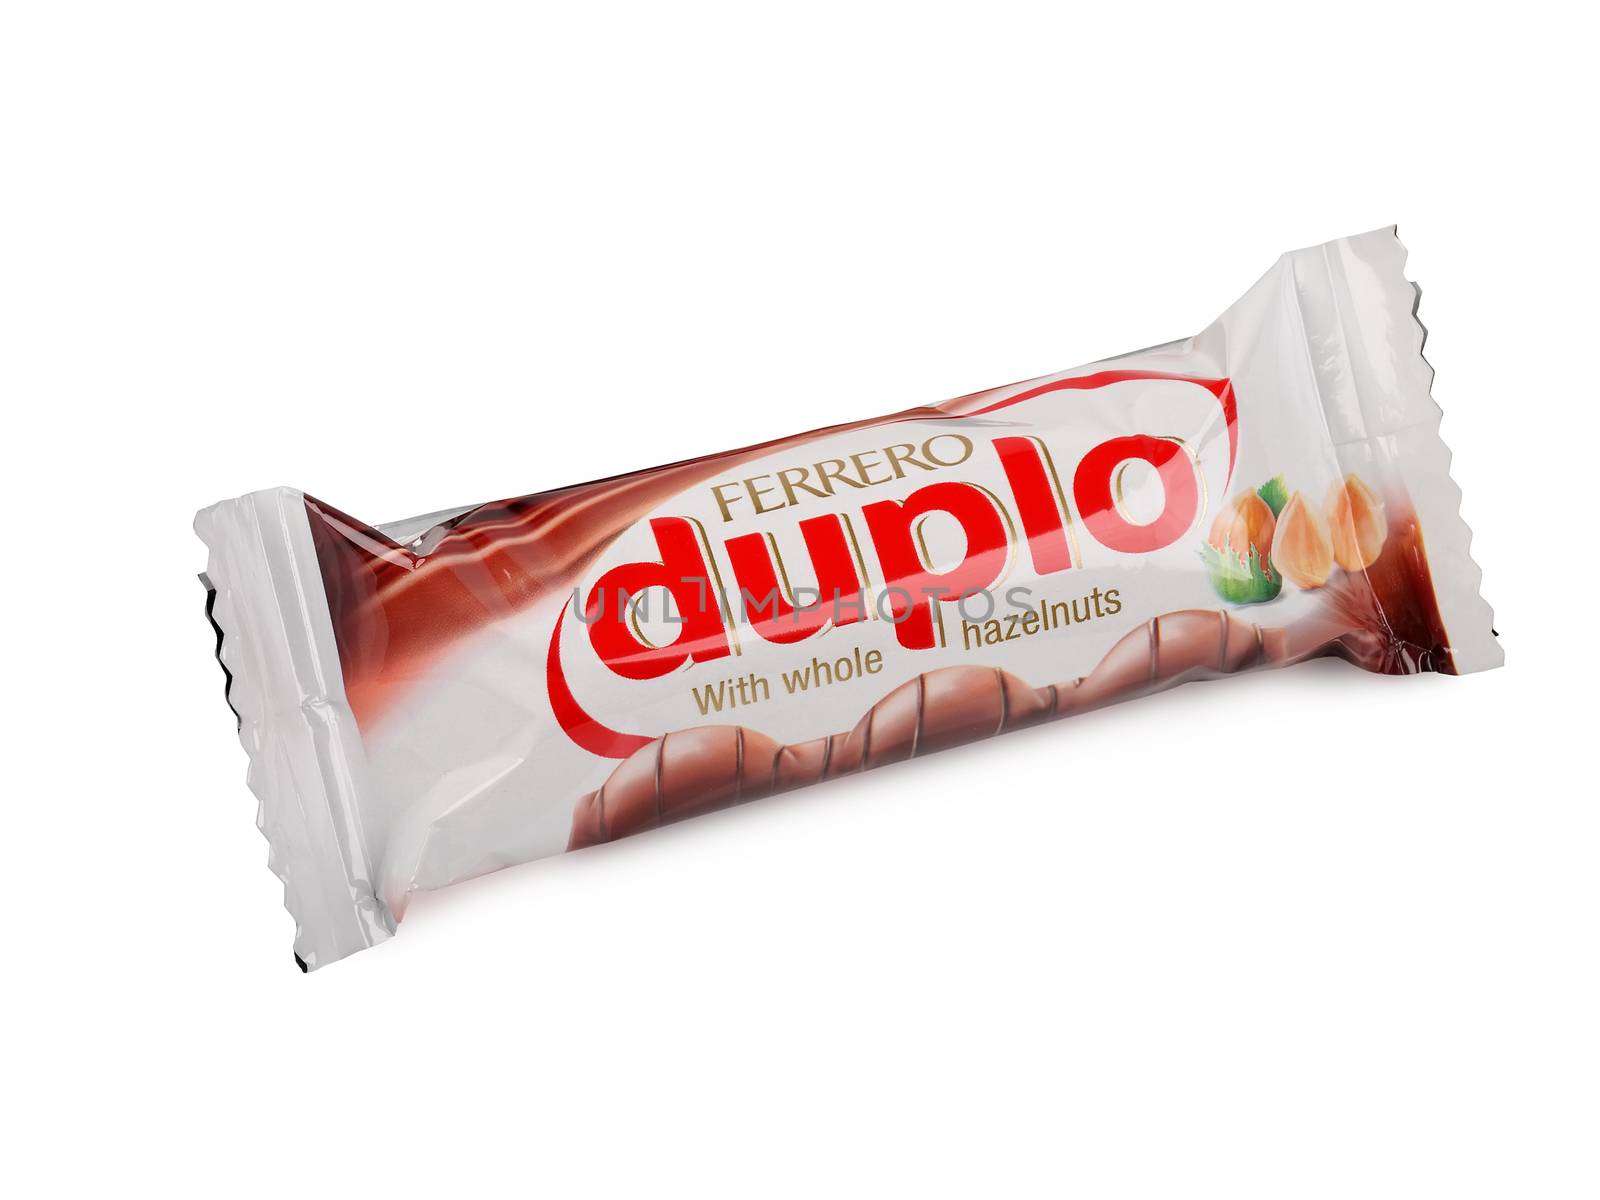 PULA, CROATIA - NOVEMBER 22, 2015: Duplo chocolate bar isolated on white background. Duplo bars are produced by Ferrero.